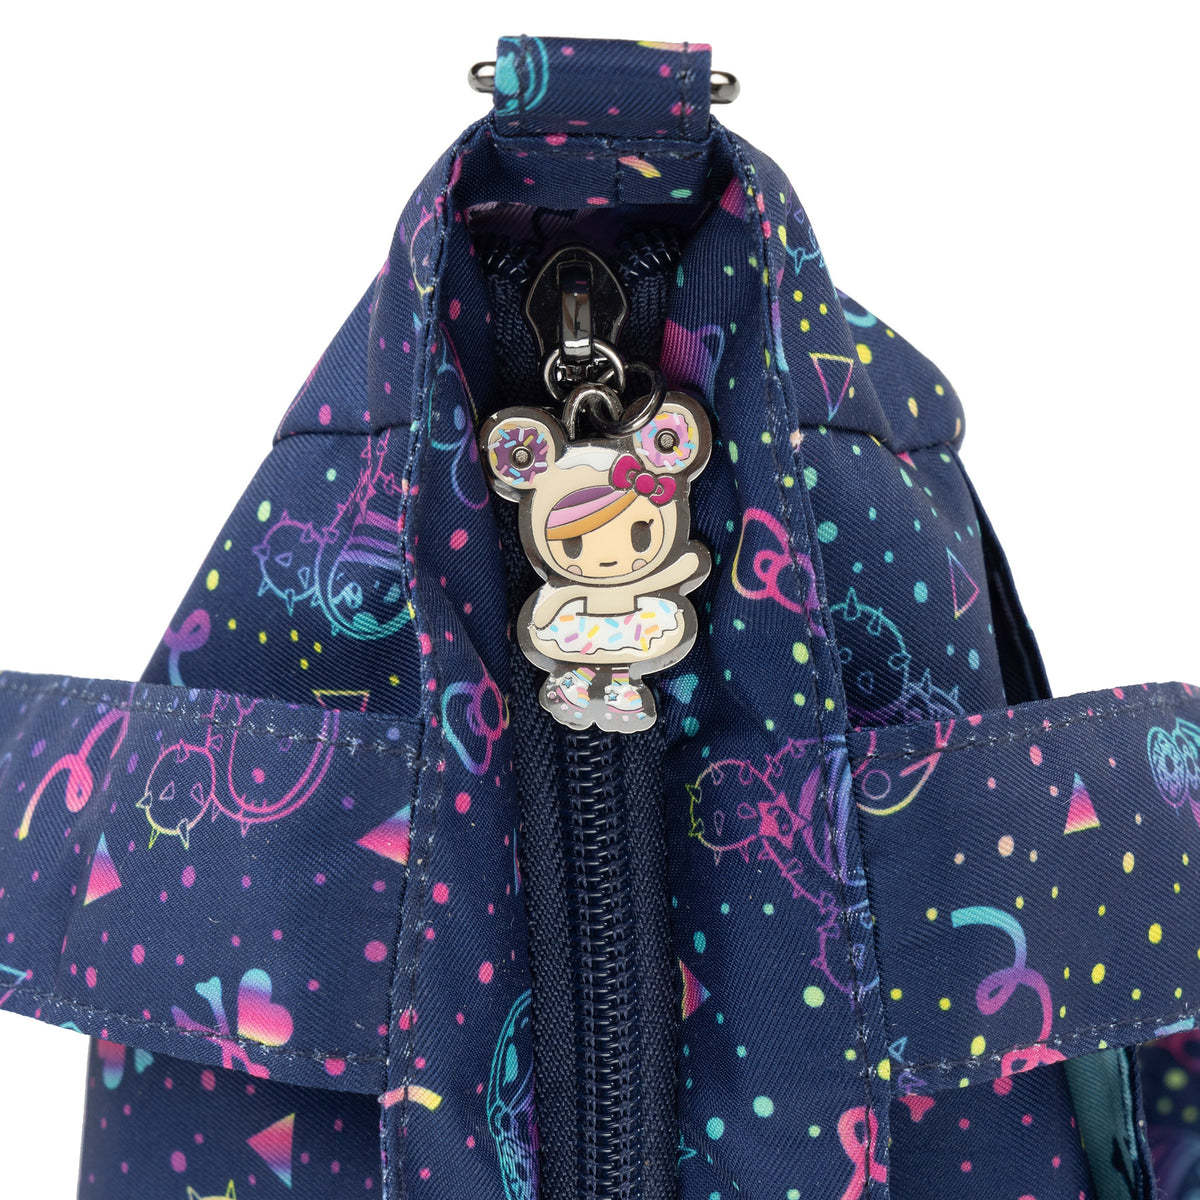 Hello Kitty &amp; Friends x Tokidoki x Jujube Confetti Dream Be Light Tote Bag Bags JuJuBe   